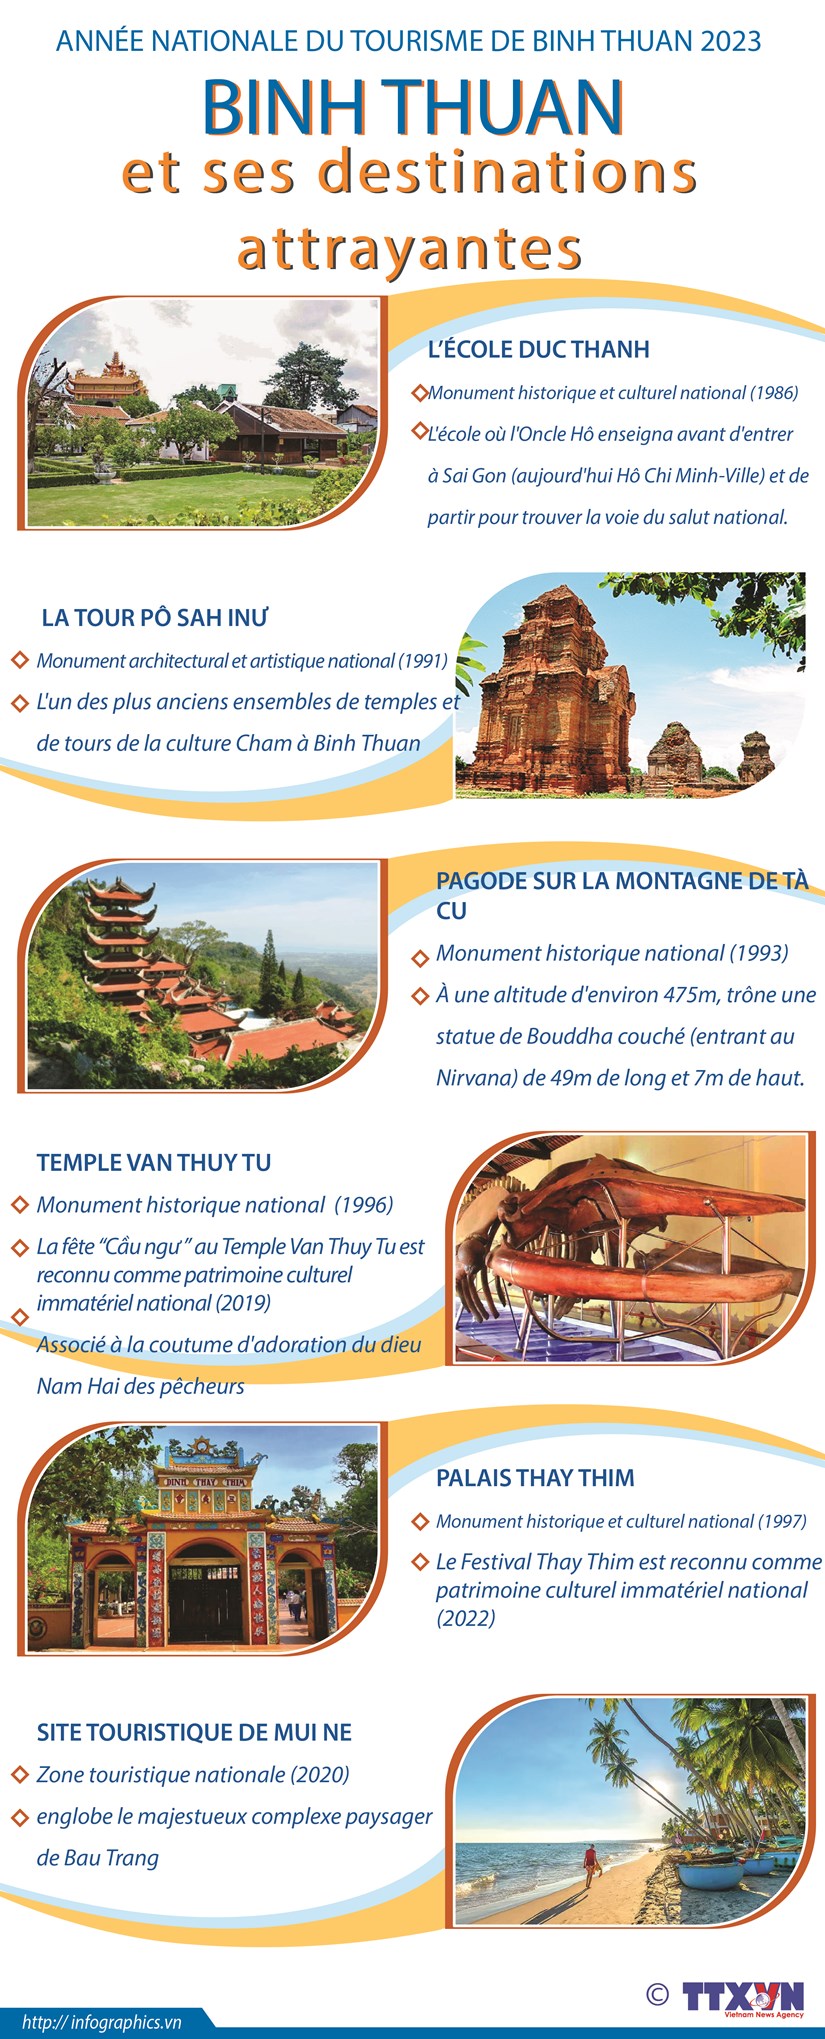 Binh Thuan et ses destinations attrayantes (CN 2/4) hinh anh 1